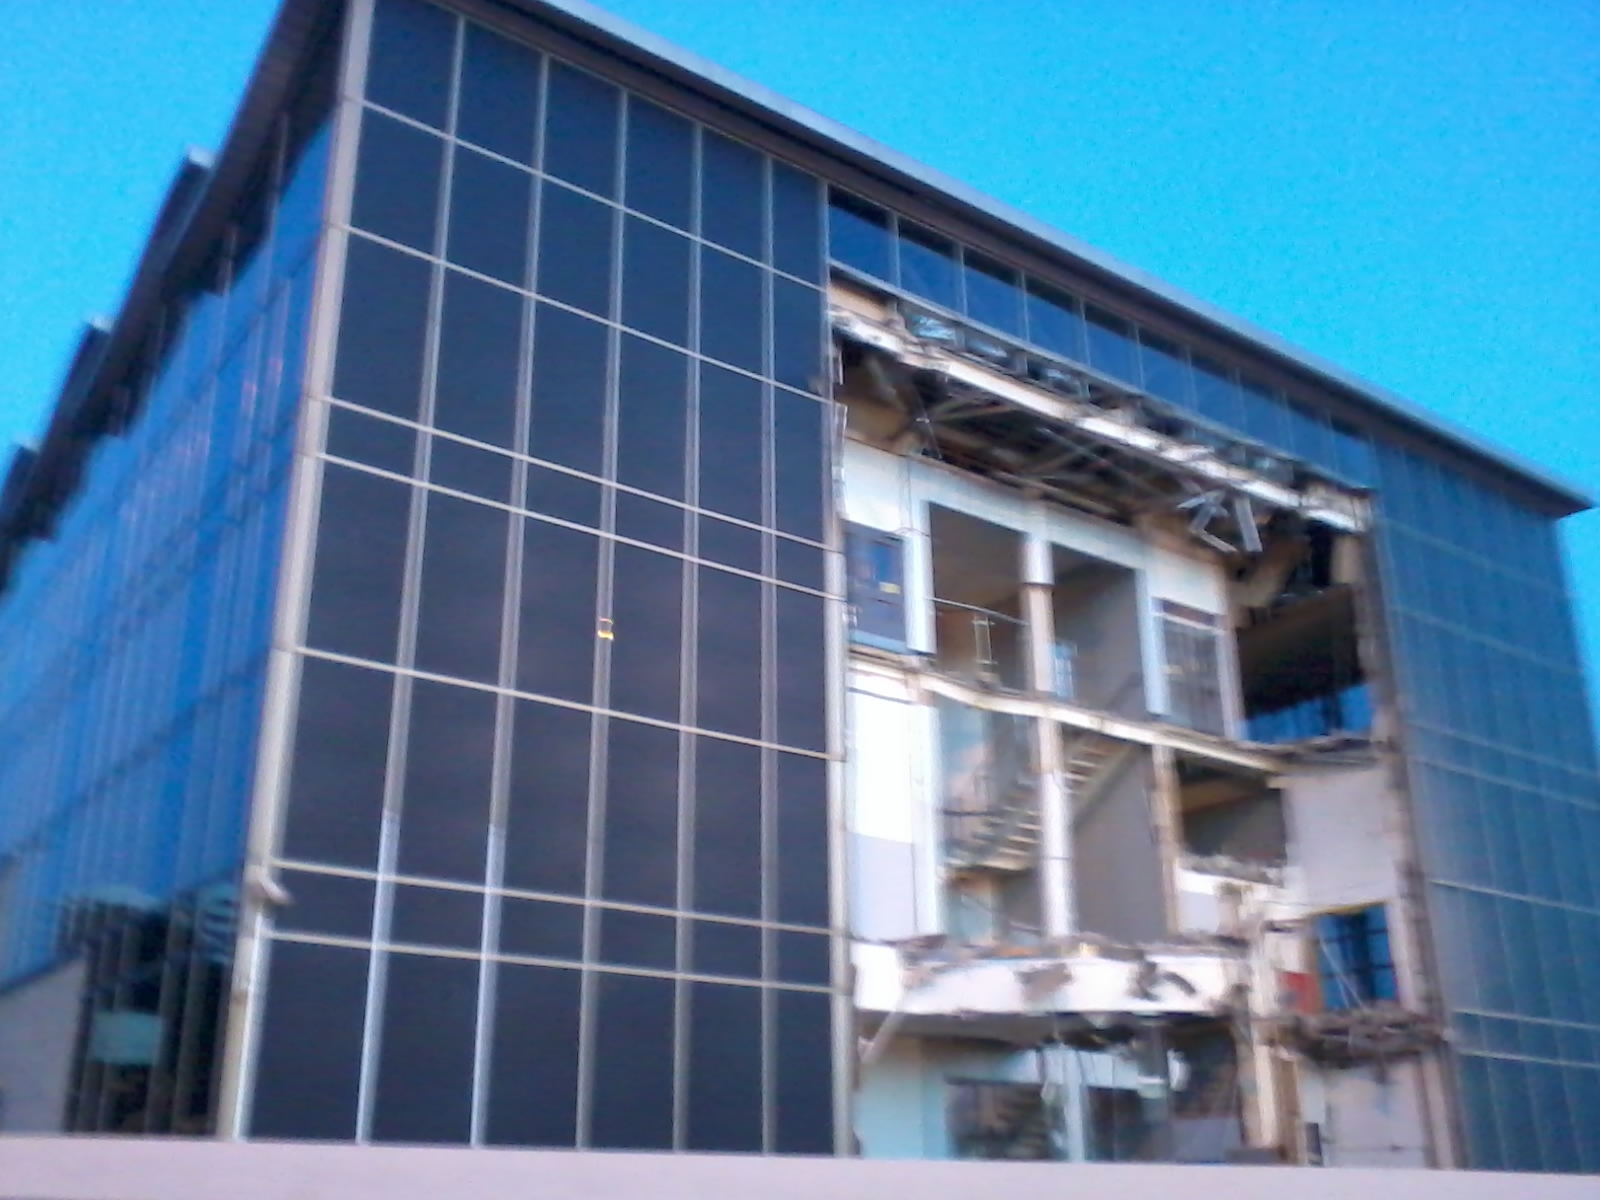 Imax demolition